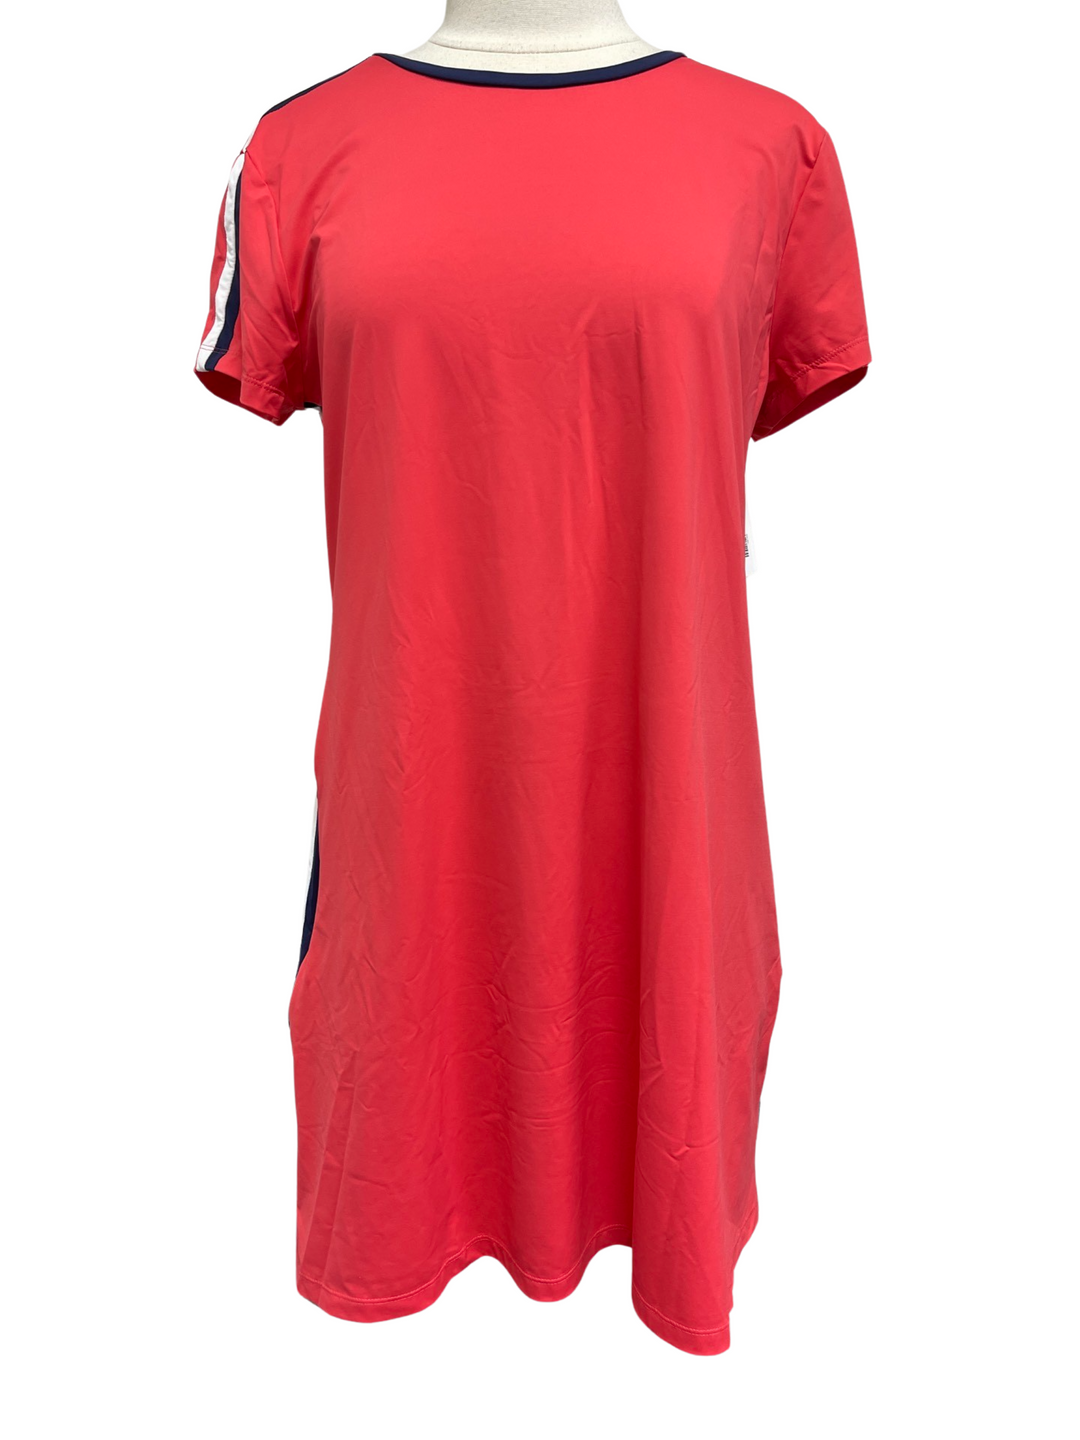 Kinona Golf Dress - Tomato Red - Size Large - Skorzie